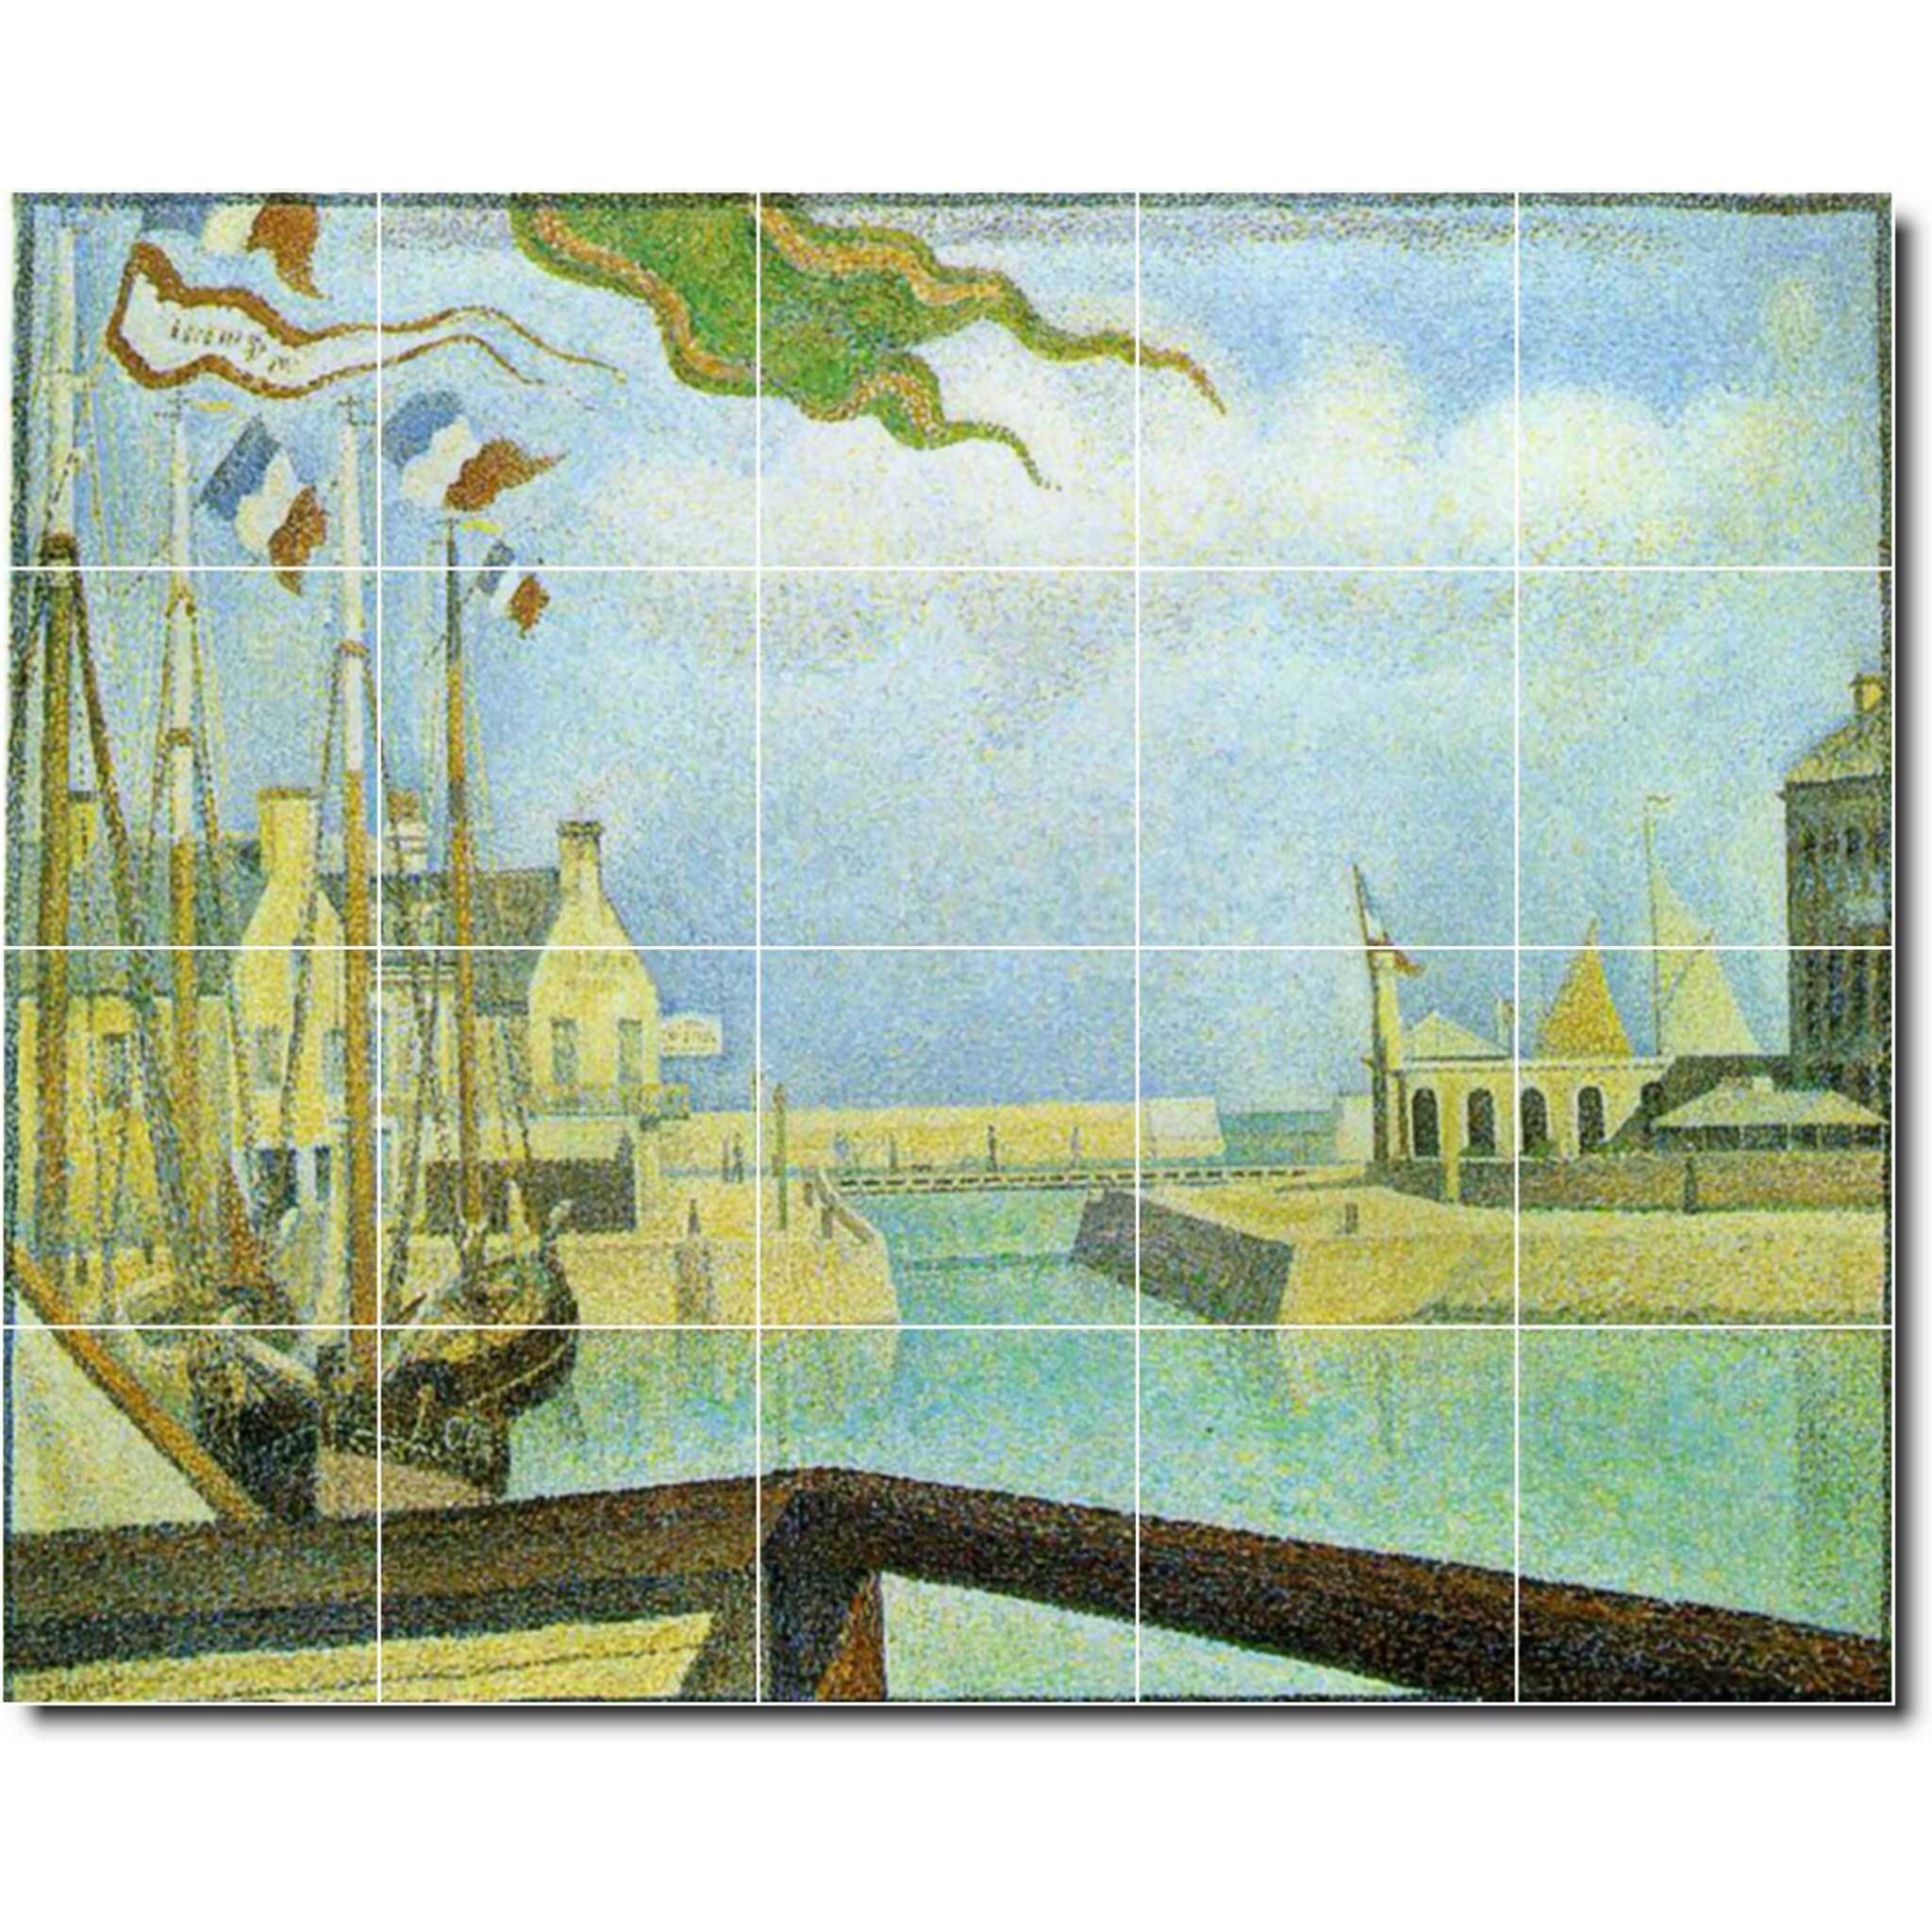 georges seurat waterfront painting ceramic tile mural p08326